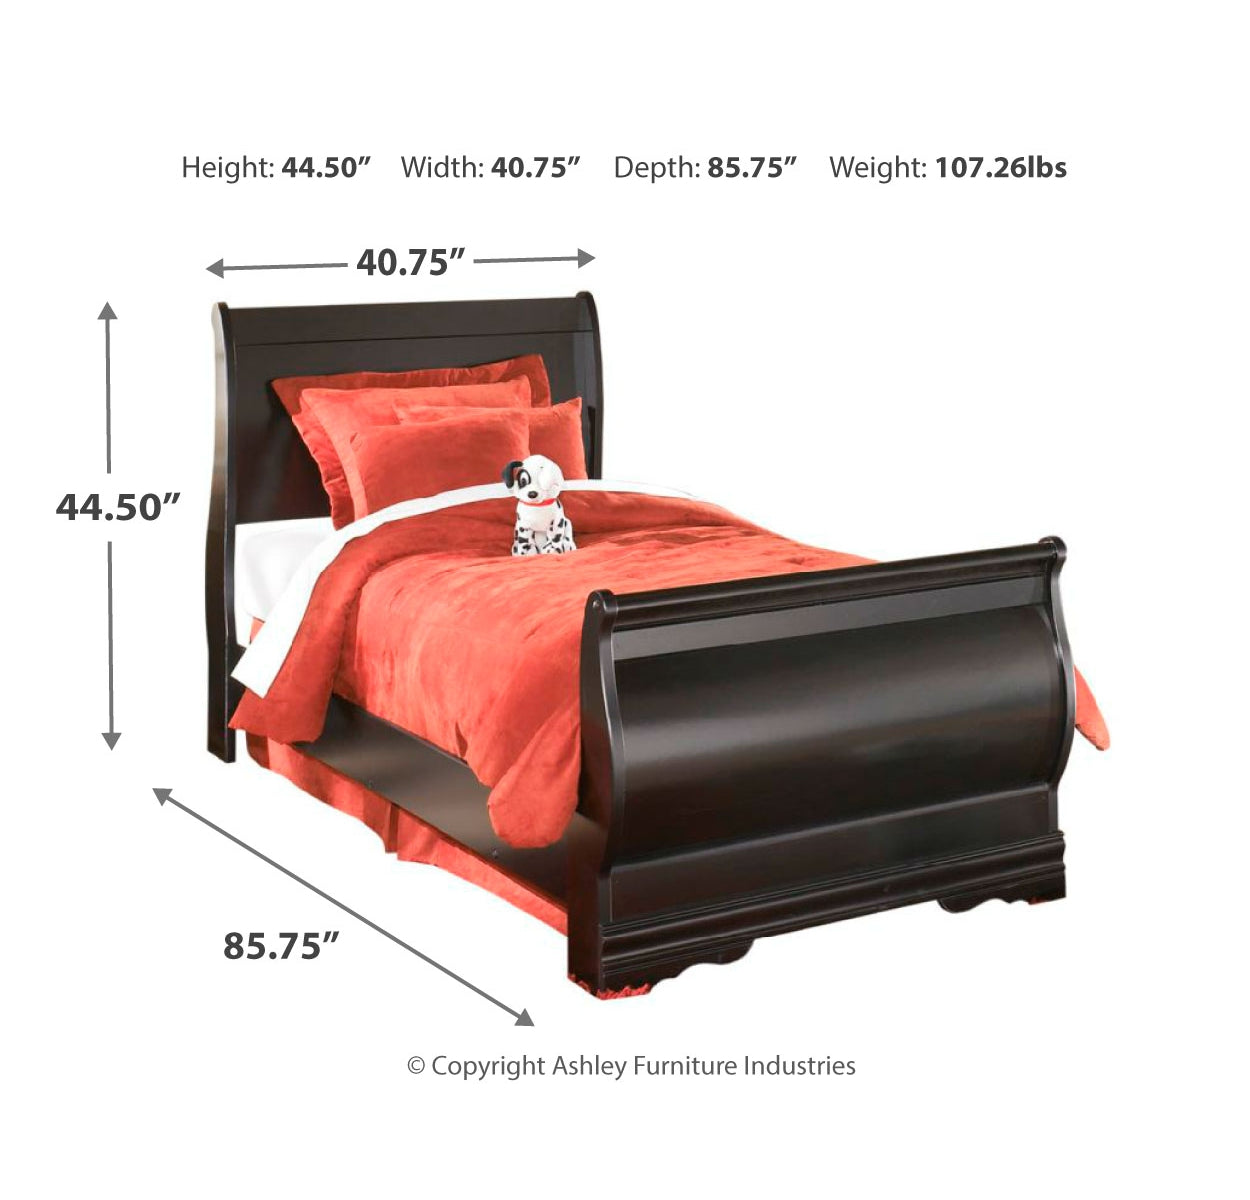 Huey Vineyard Twin Sleigh Bed with Dresser